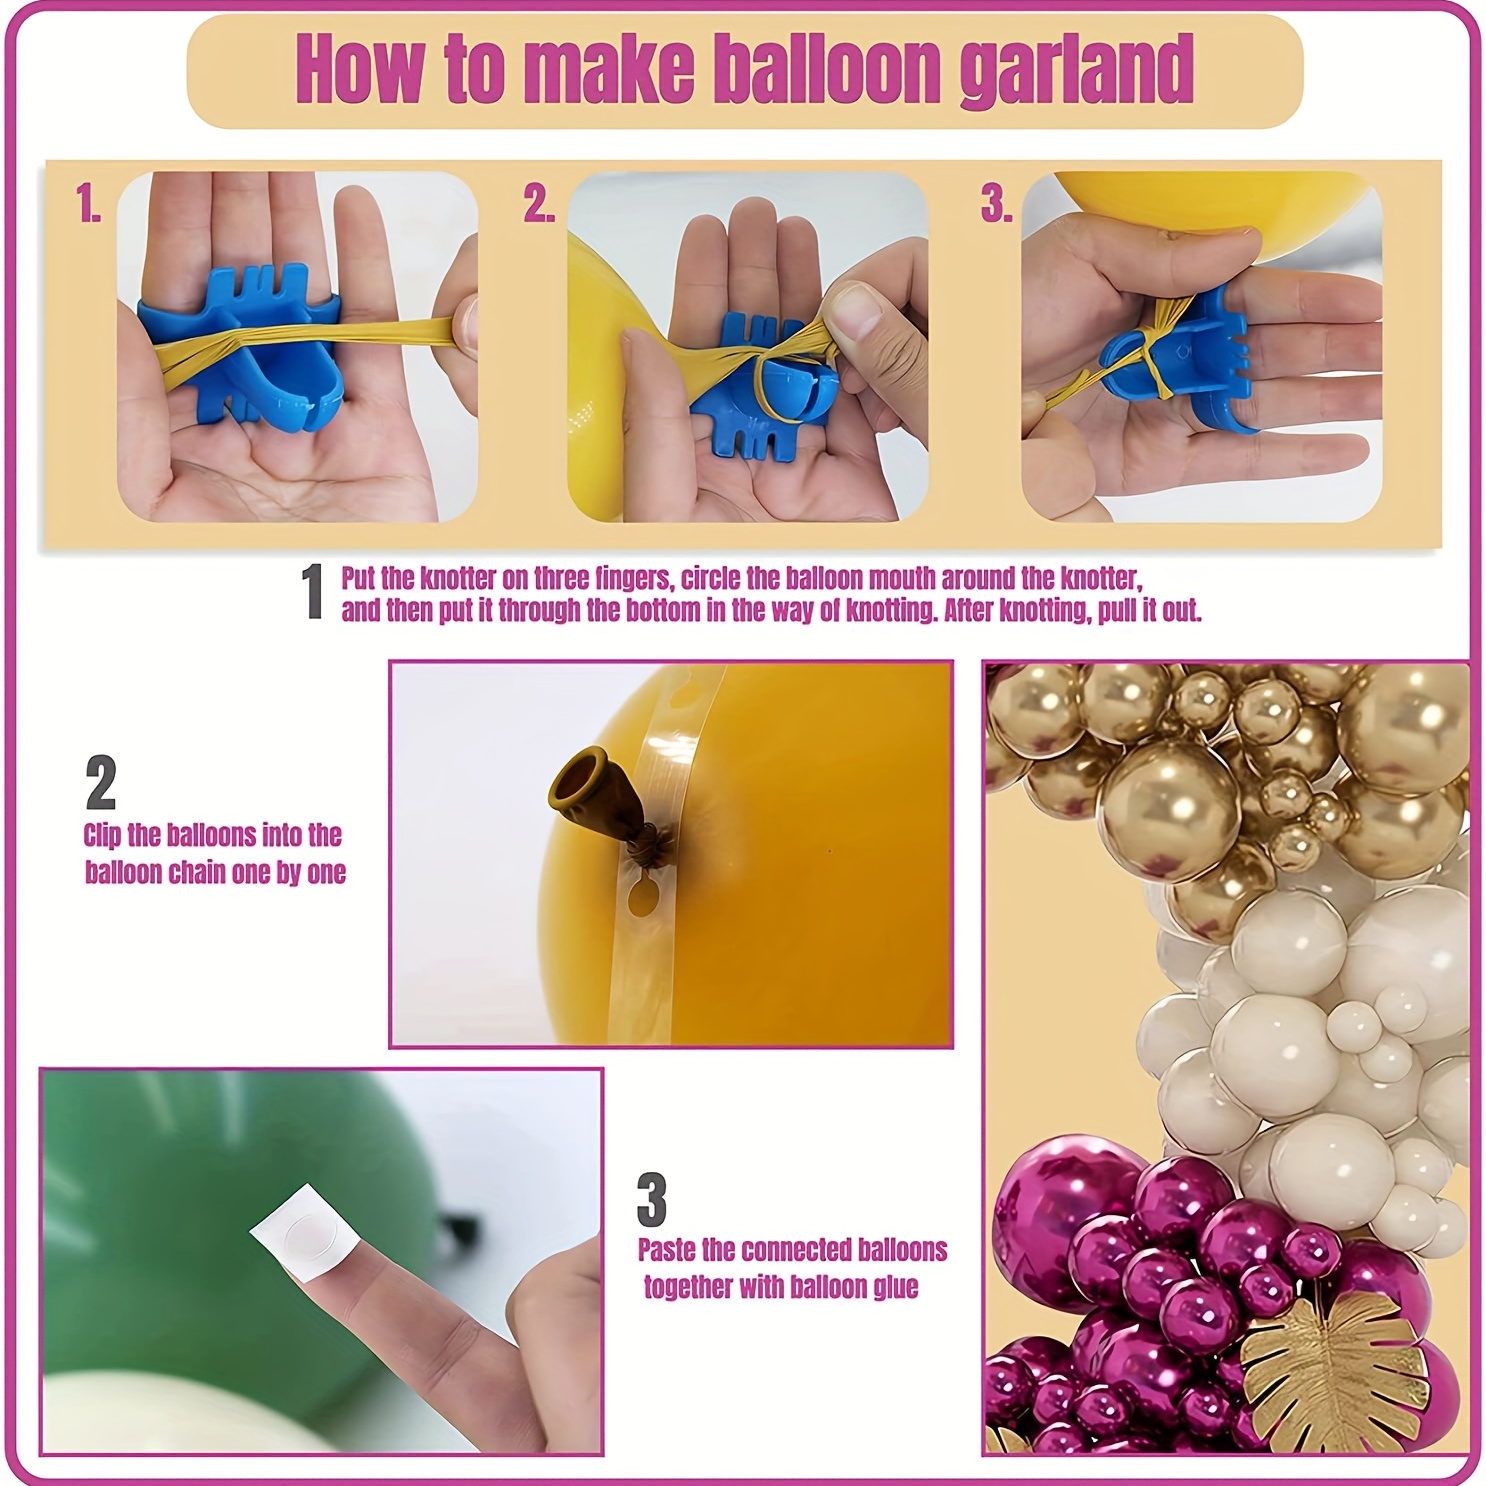 Baby Shower Decorations for Girl 135 Pcs Pink Purple Balloon Garland Kit  Metalli